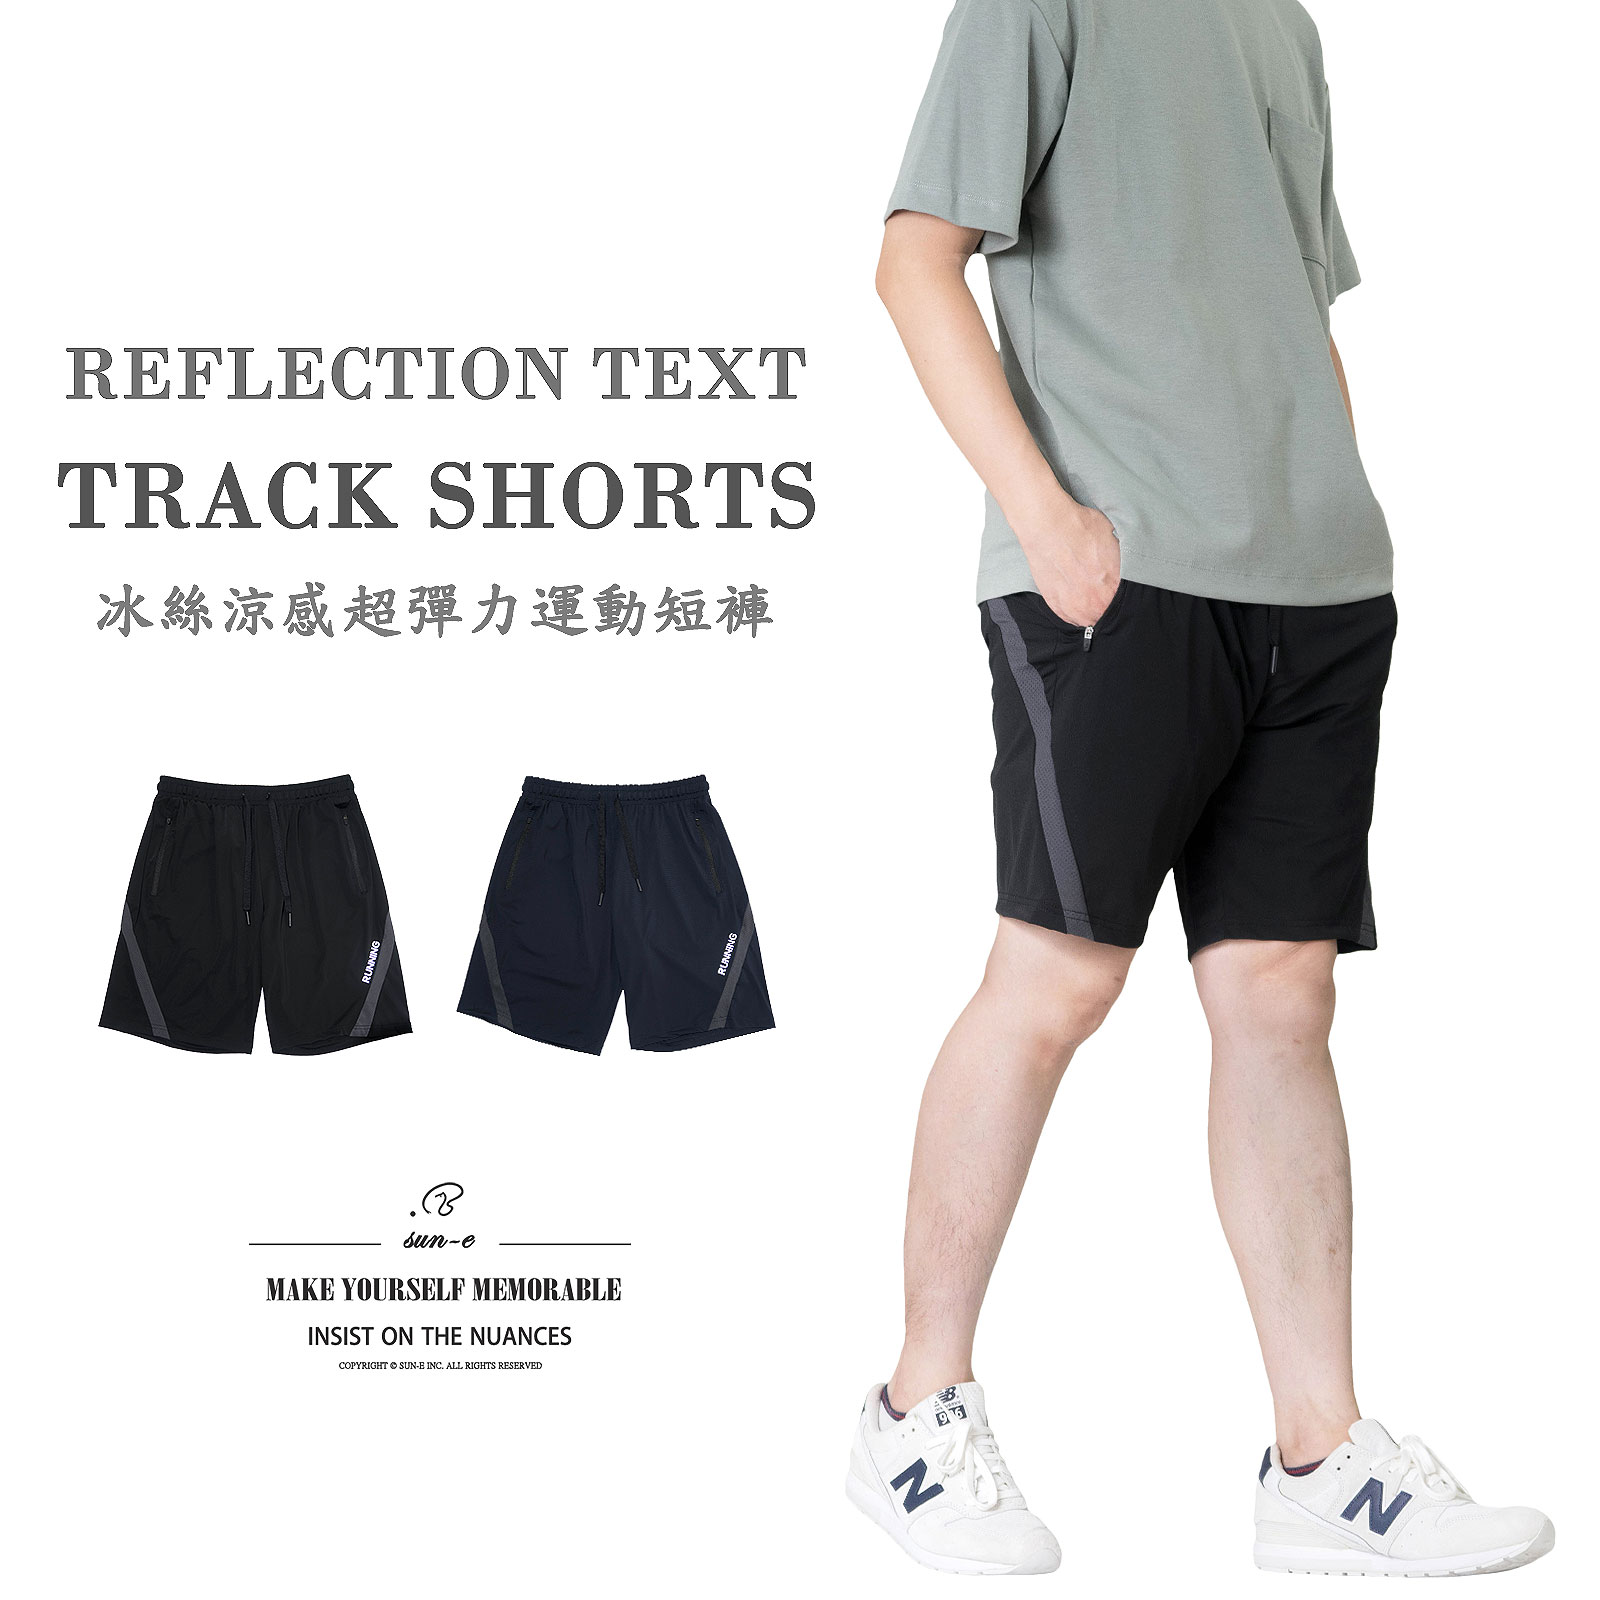 sun-e冰絲涼感短褲、輕薄超彈力運動短褲、涼爽透氣網眼休閒短褲、夜間活動反光材質、全腰圍鬆緊帶彈性休閒褲、黑色短褲、Cooling Elastic Track Shorts、Athleisure、Reflective Text Casual Shorts、Stretch Shorts、Track Pants、Short Pants、Sport Shorts (312-7212-08)深藍色、(312-7212-21)黑色 L XL (腰圍:30~39英吋 / 76~99公分) 男 [實體店面保障]